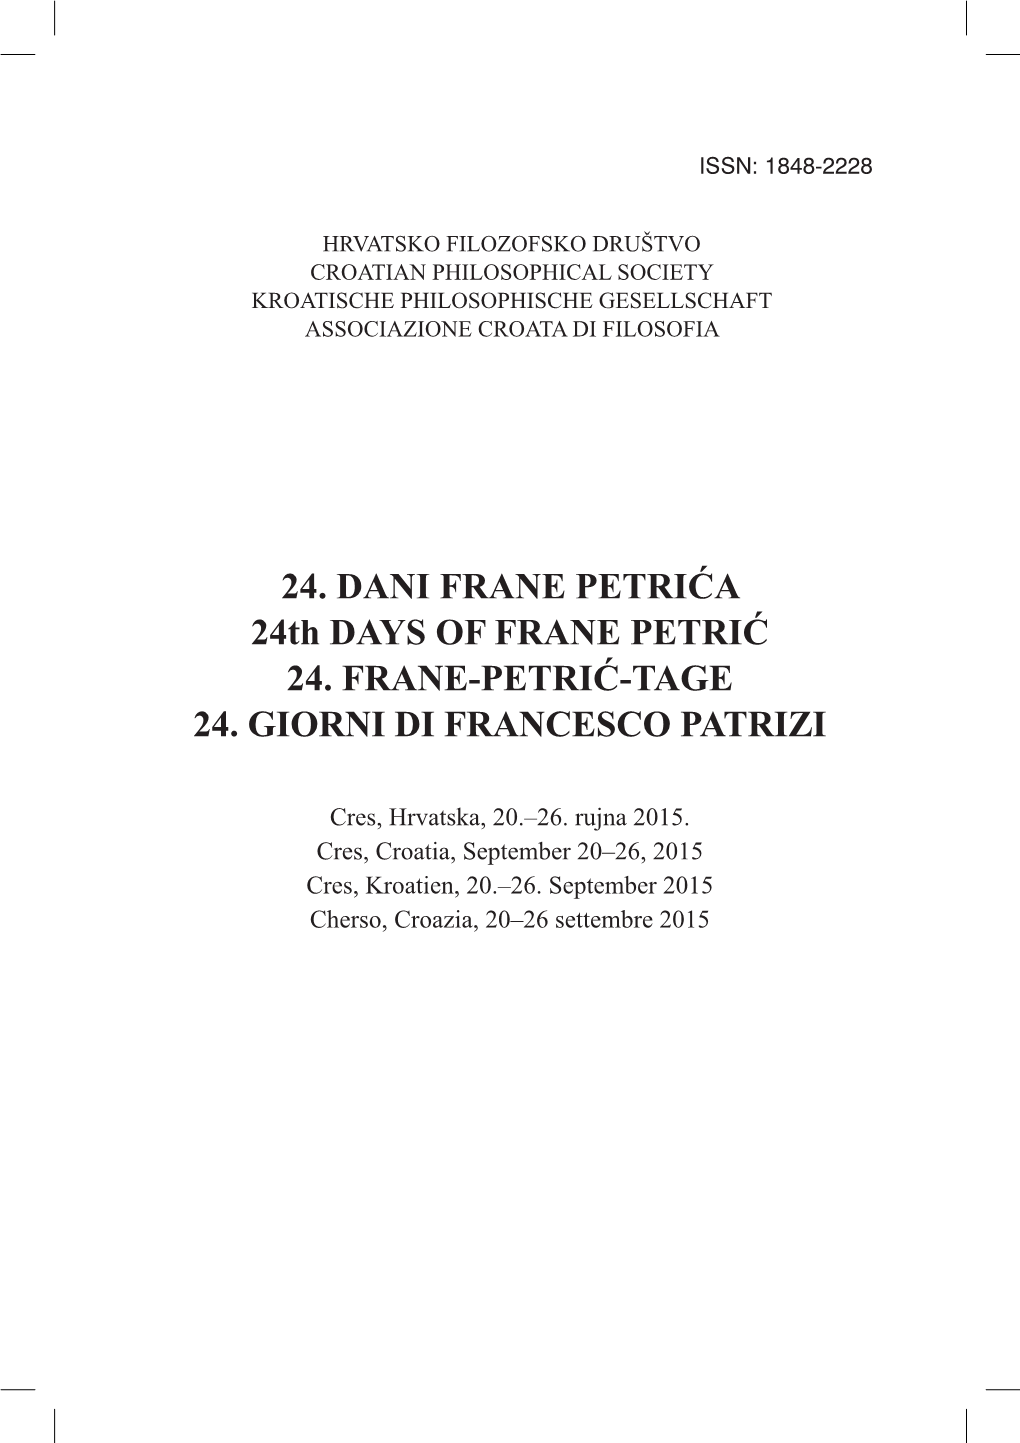 24Th DAYS of FRANE PETRIĆ 24